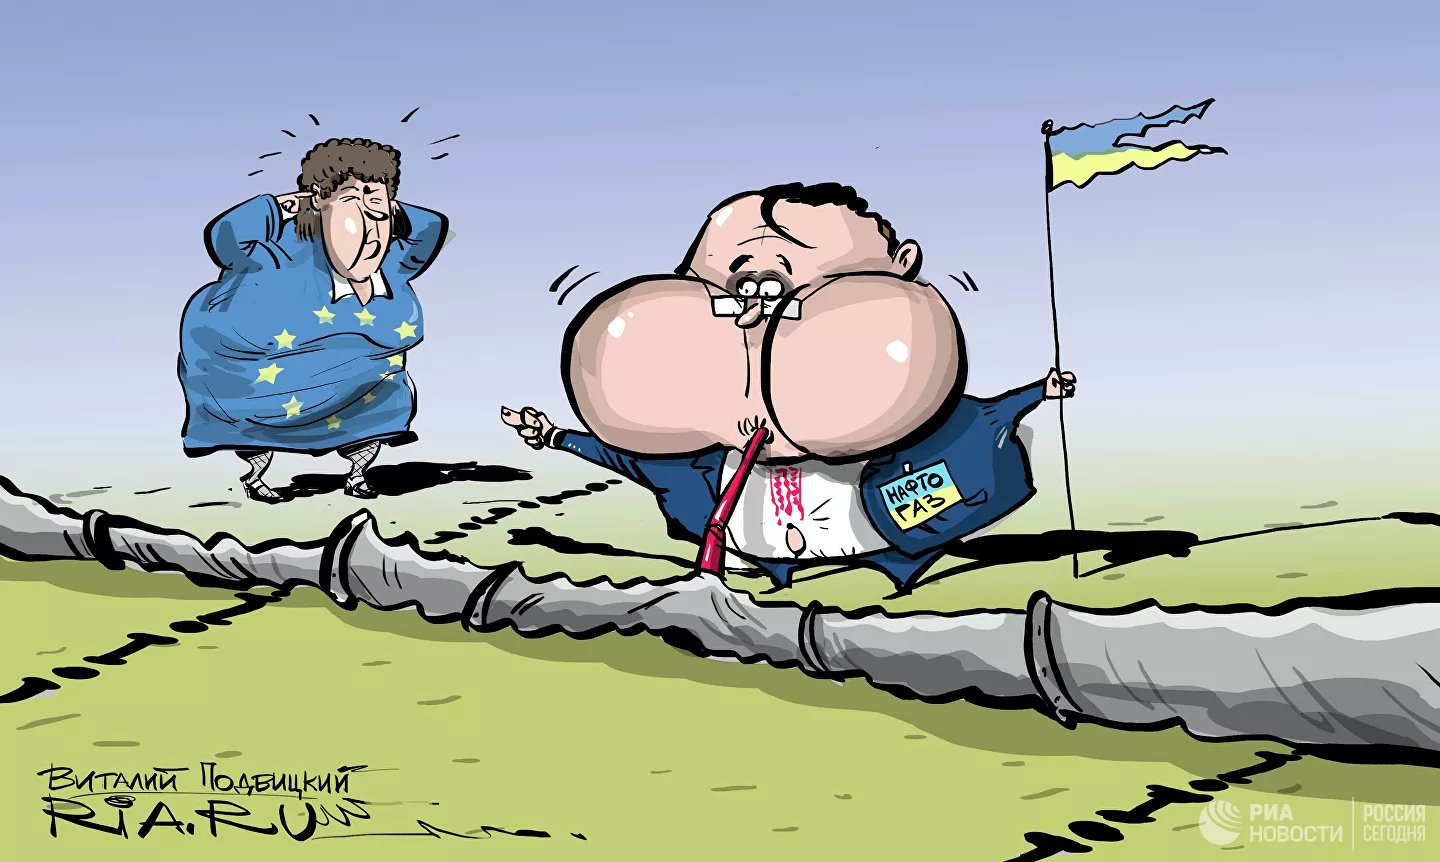 Карикатура "А не треснет?", Виталий Подвицкий